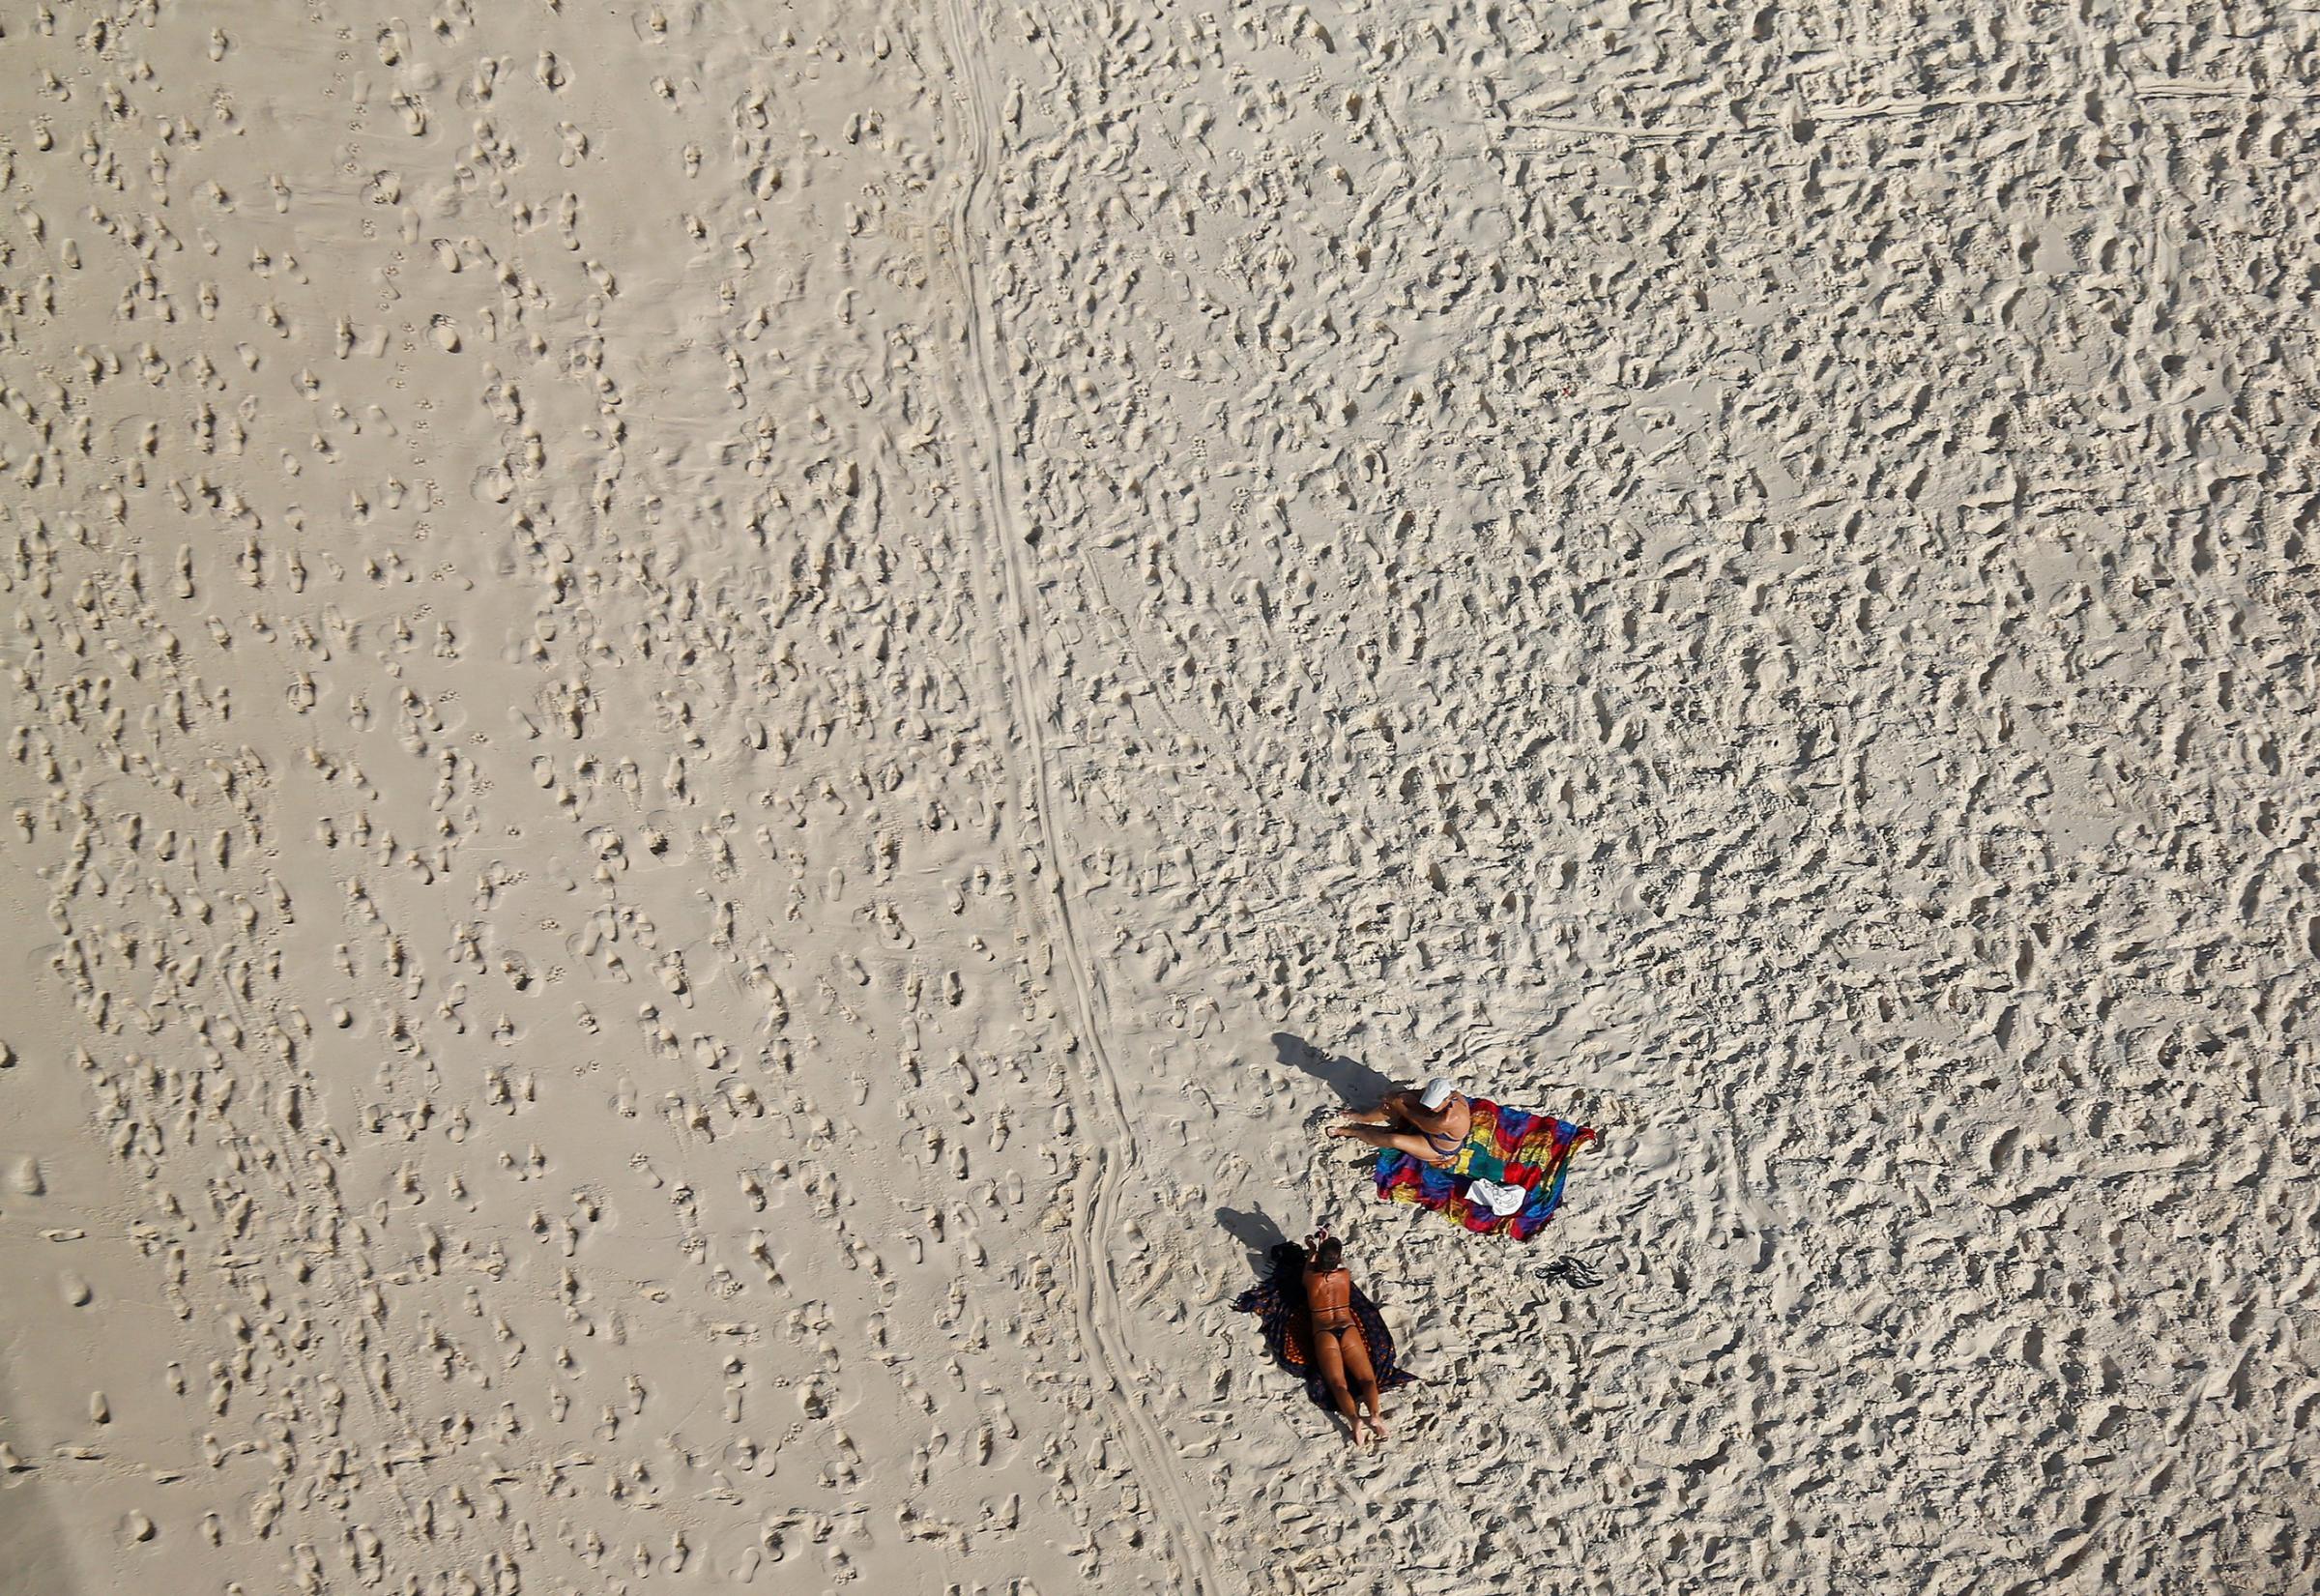 An aerial view shows people on Barra da Tijuca beach in Rio de Janeiro, July 16, 2016.